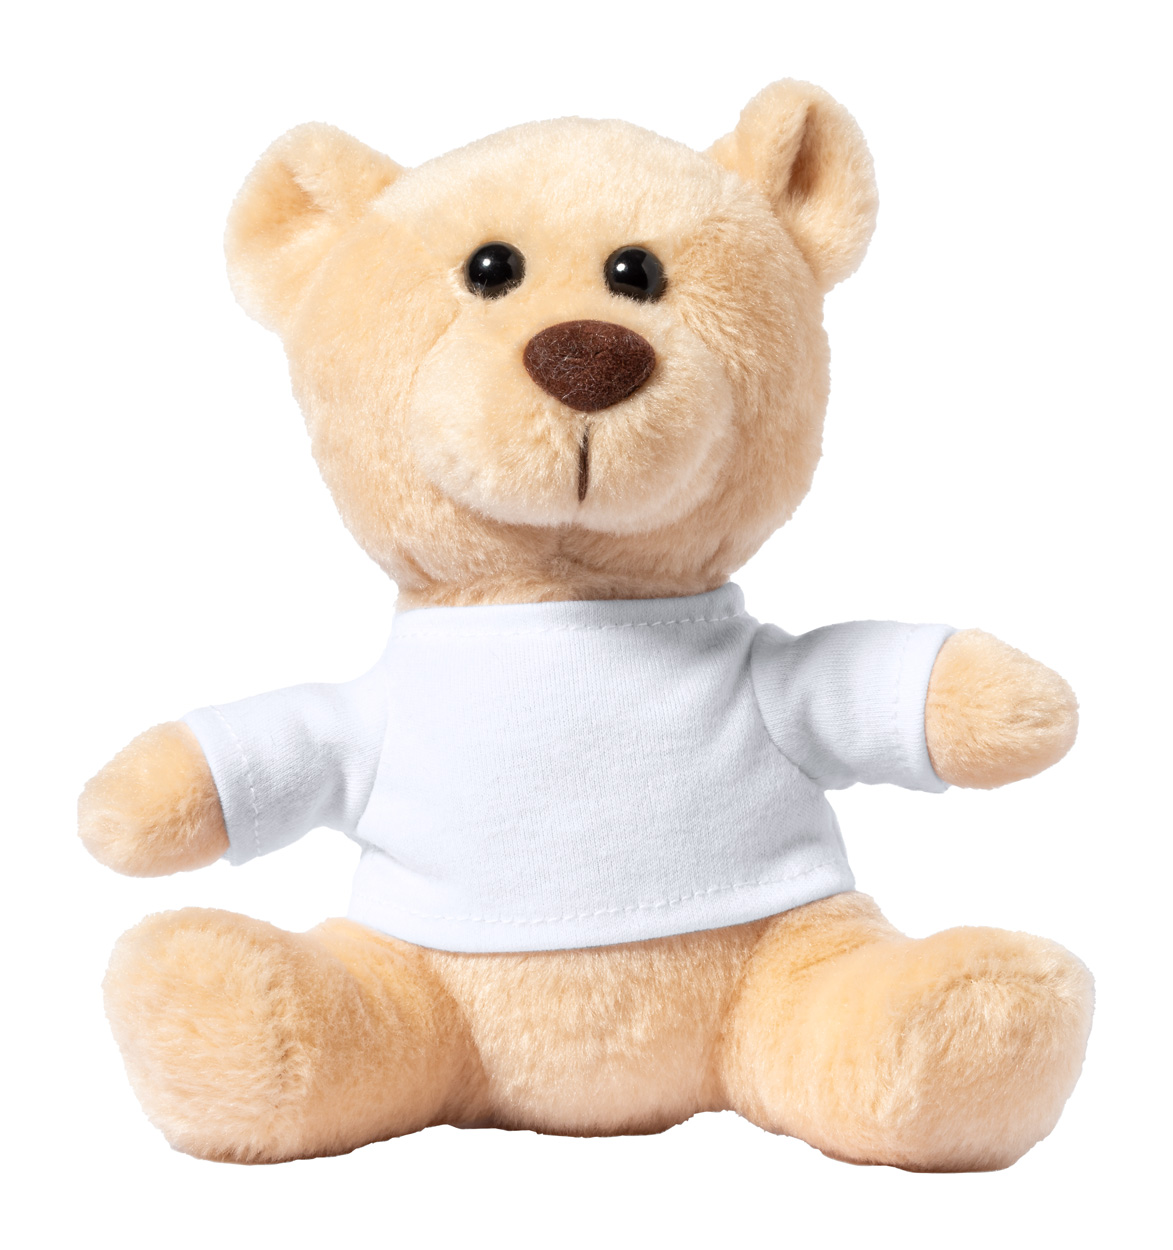 Plush teddy bear SINCLER